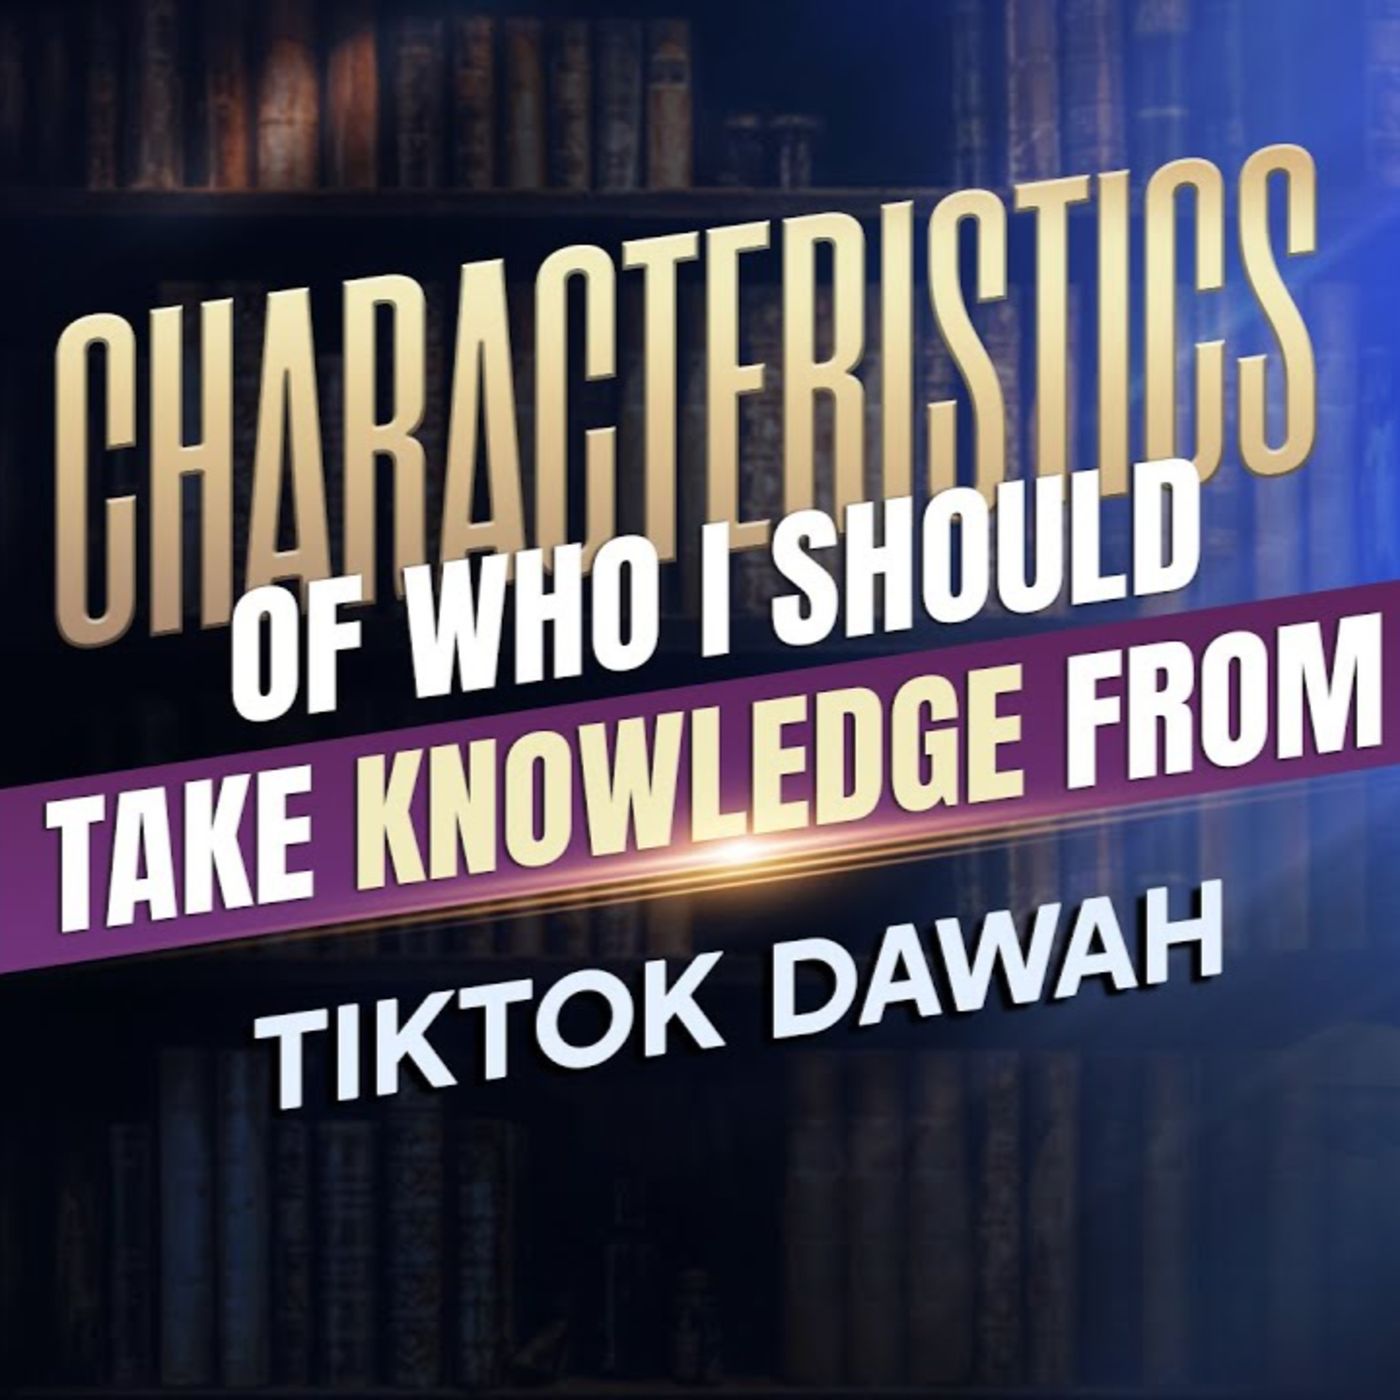 TIKTOK Dawah & Characteristics Of Who I Should Take Knowledge From